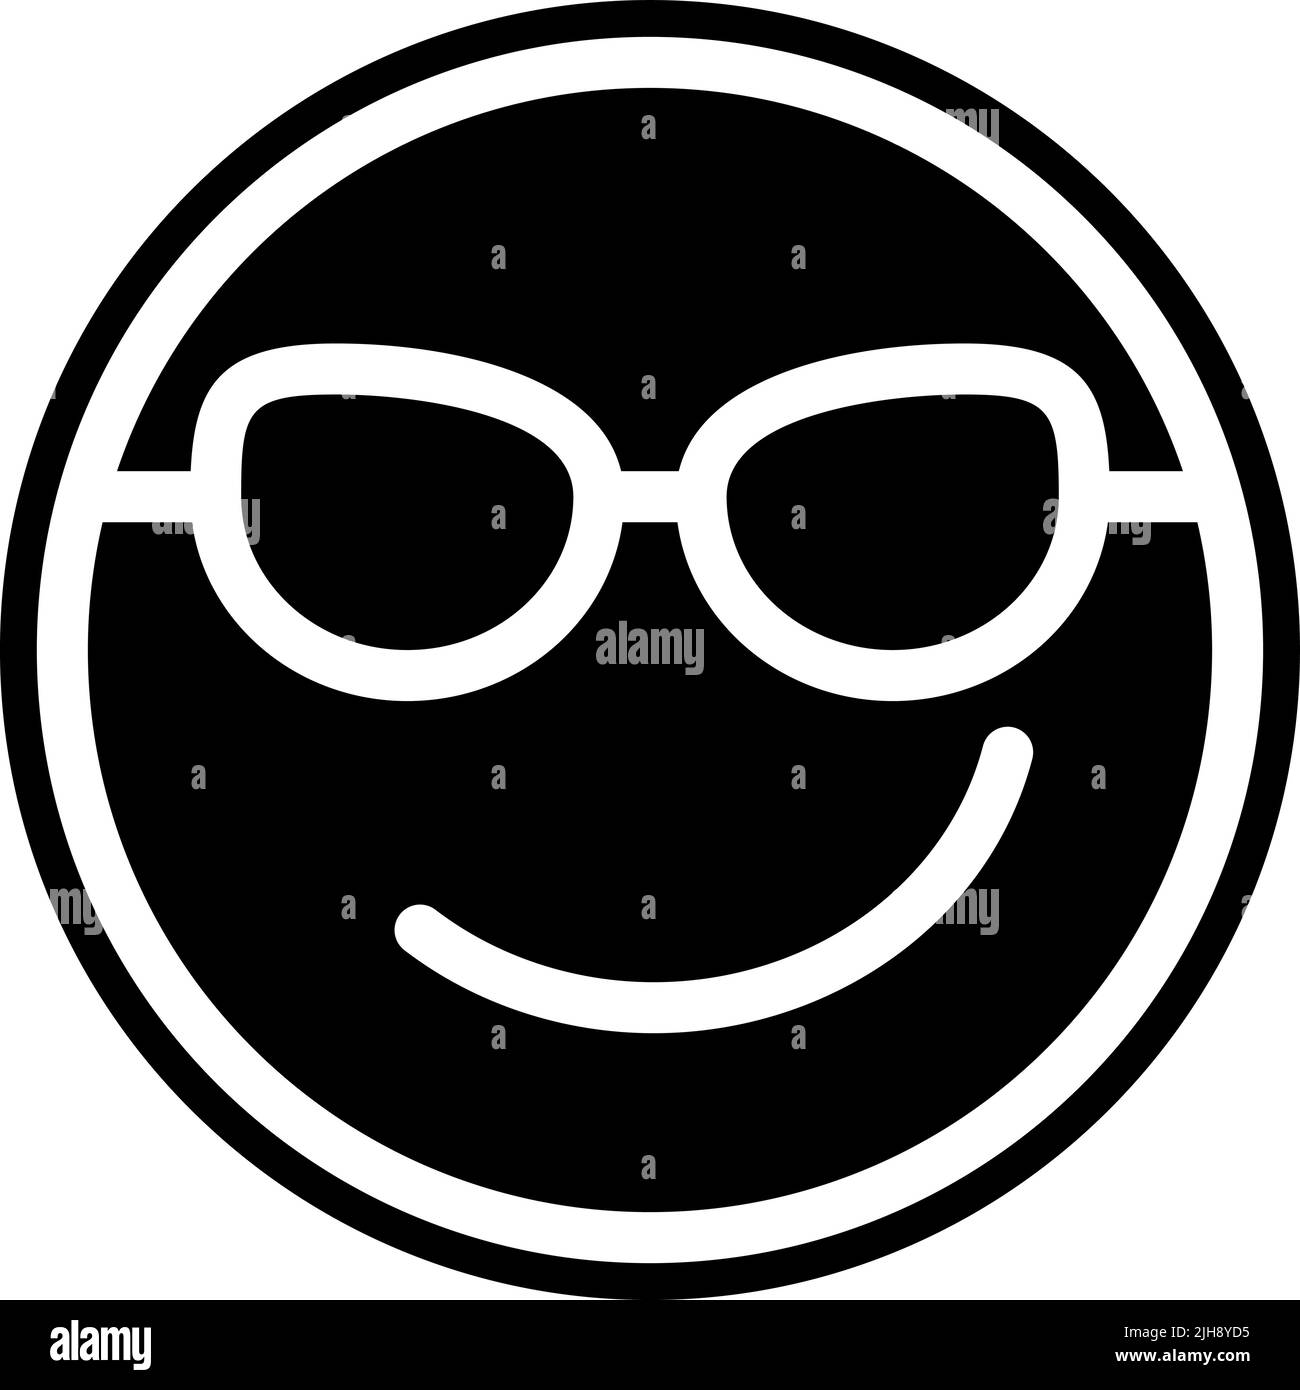 Facebook emoji Black and White Stock Photos & Images - Alamy